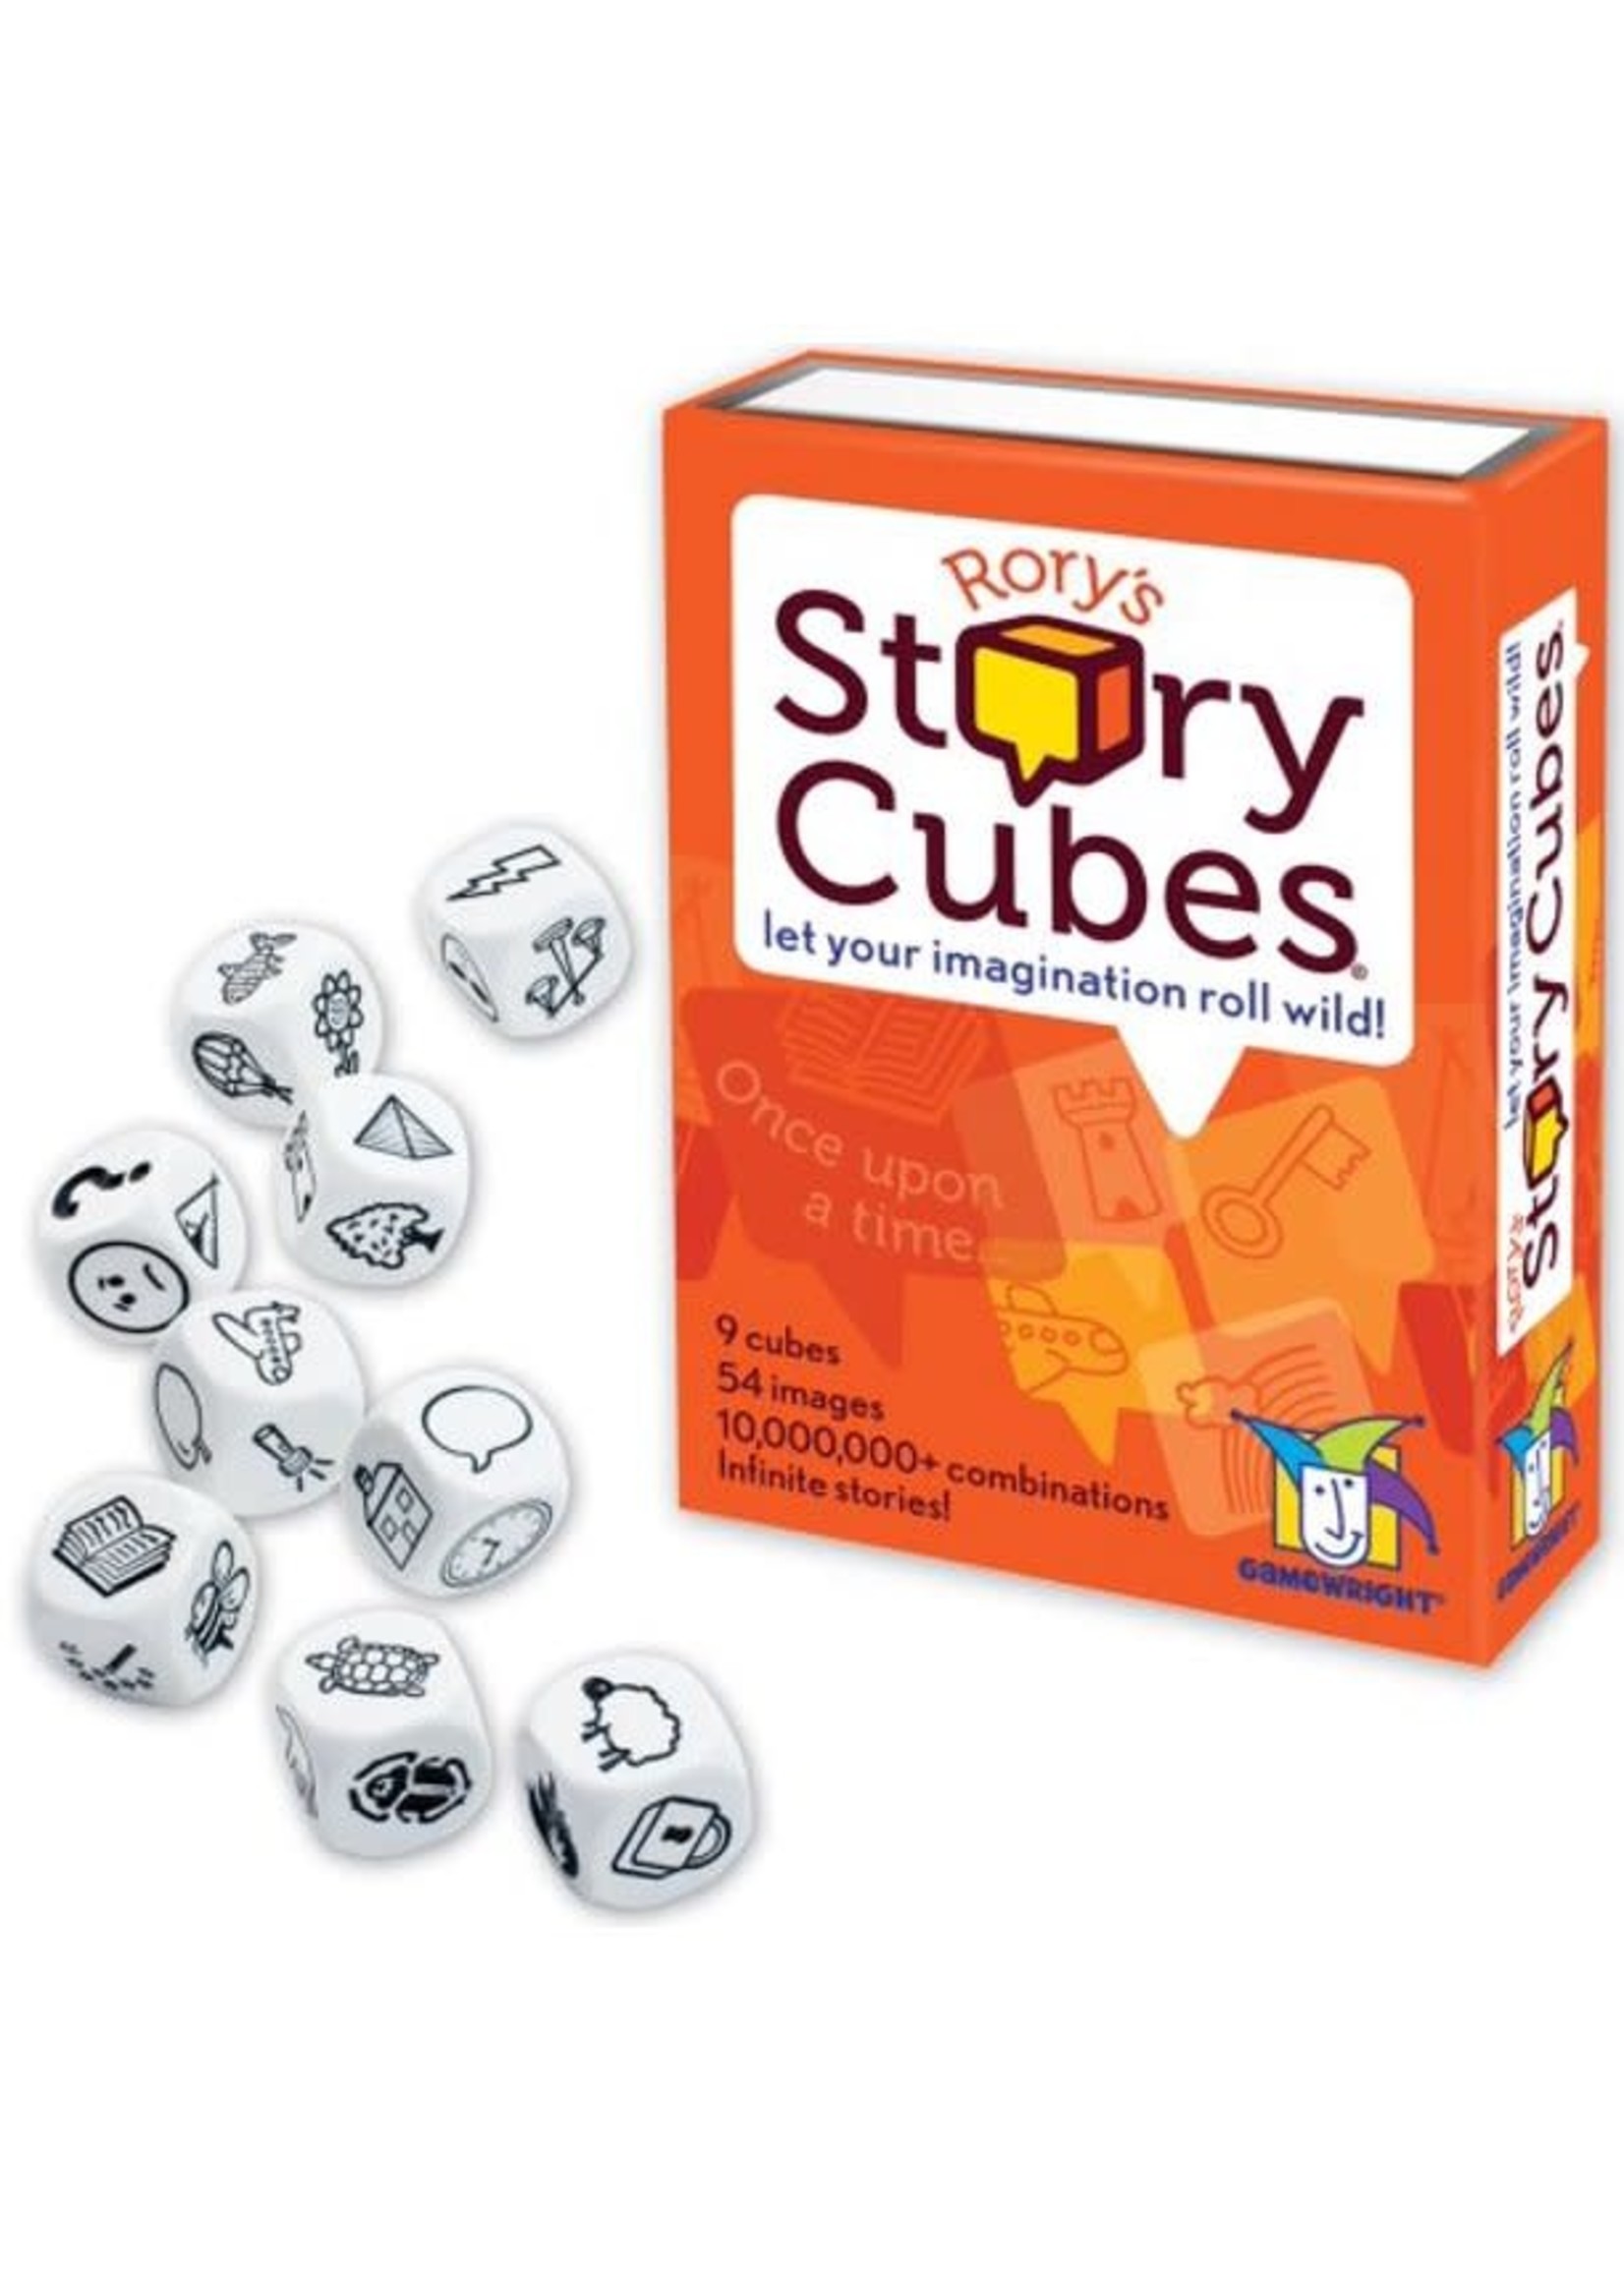 Zygomatic Rory's Story Cubes (Box)